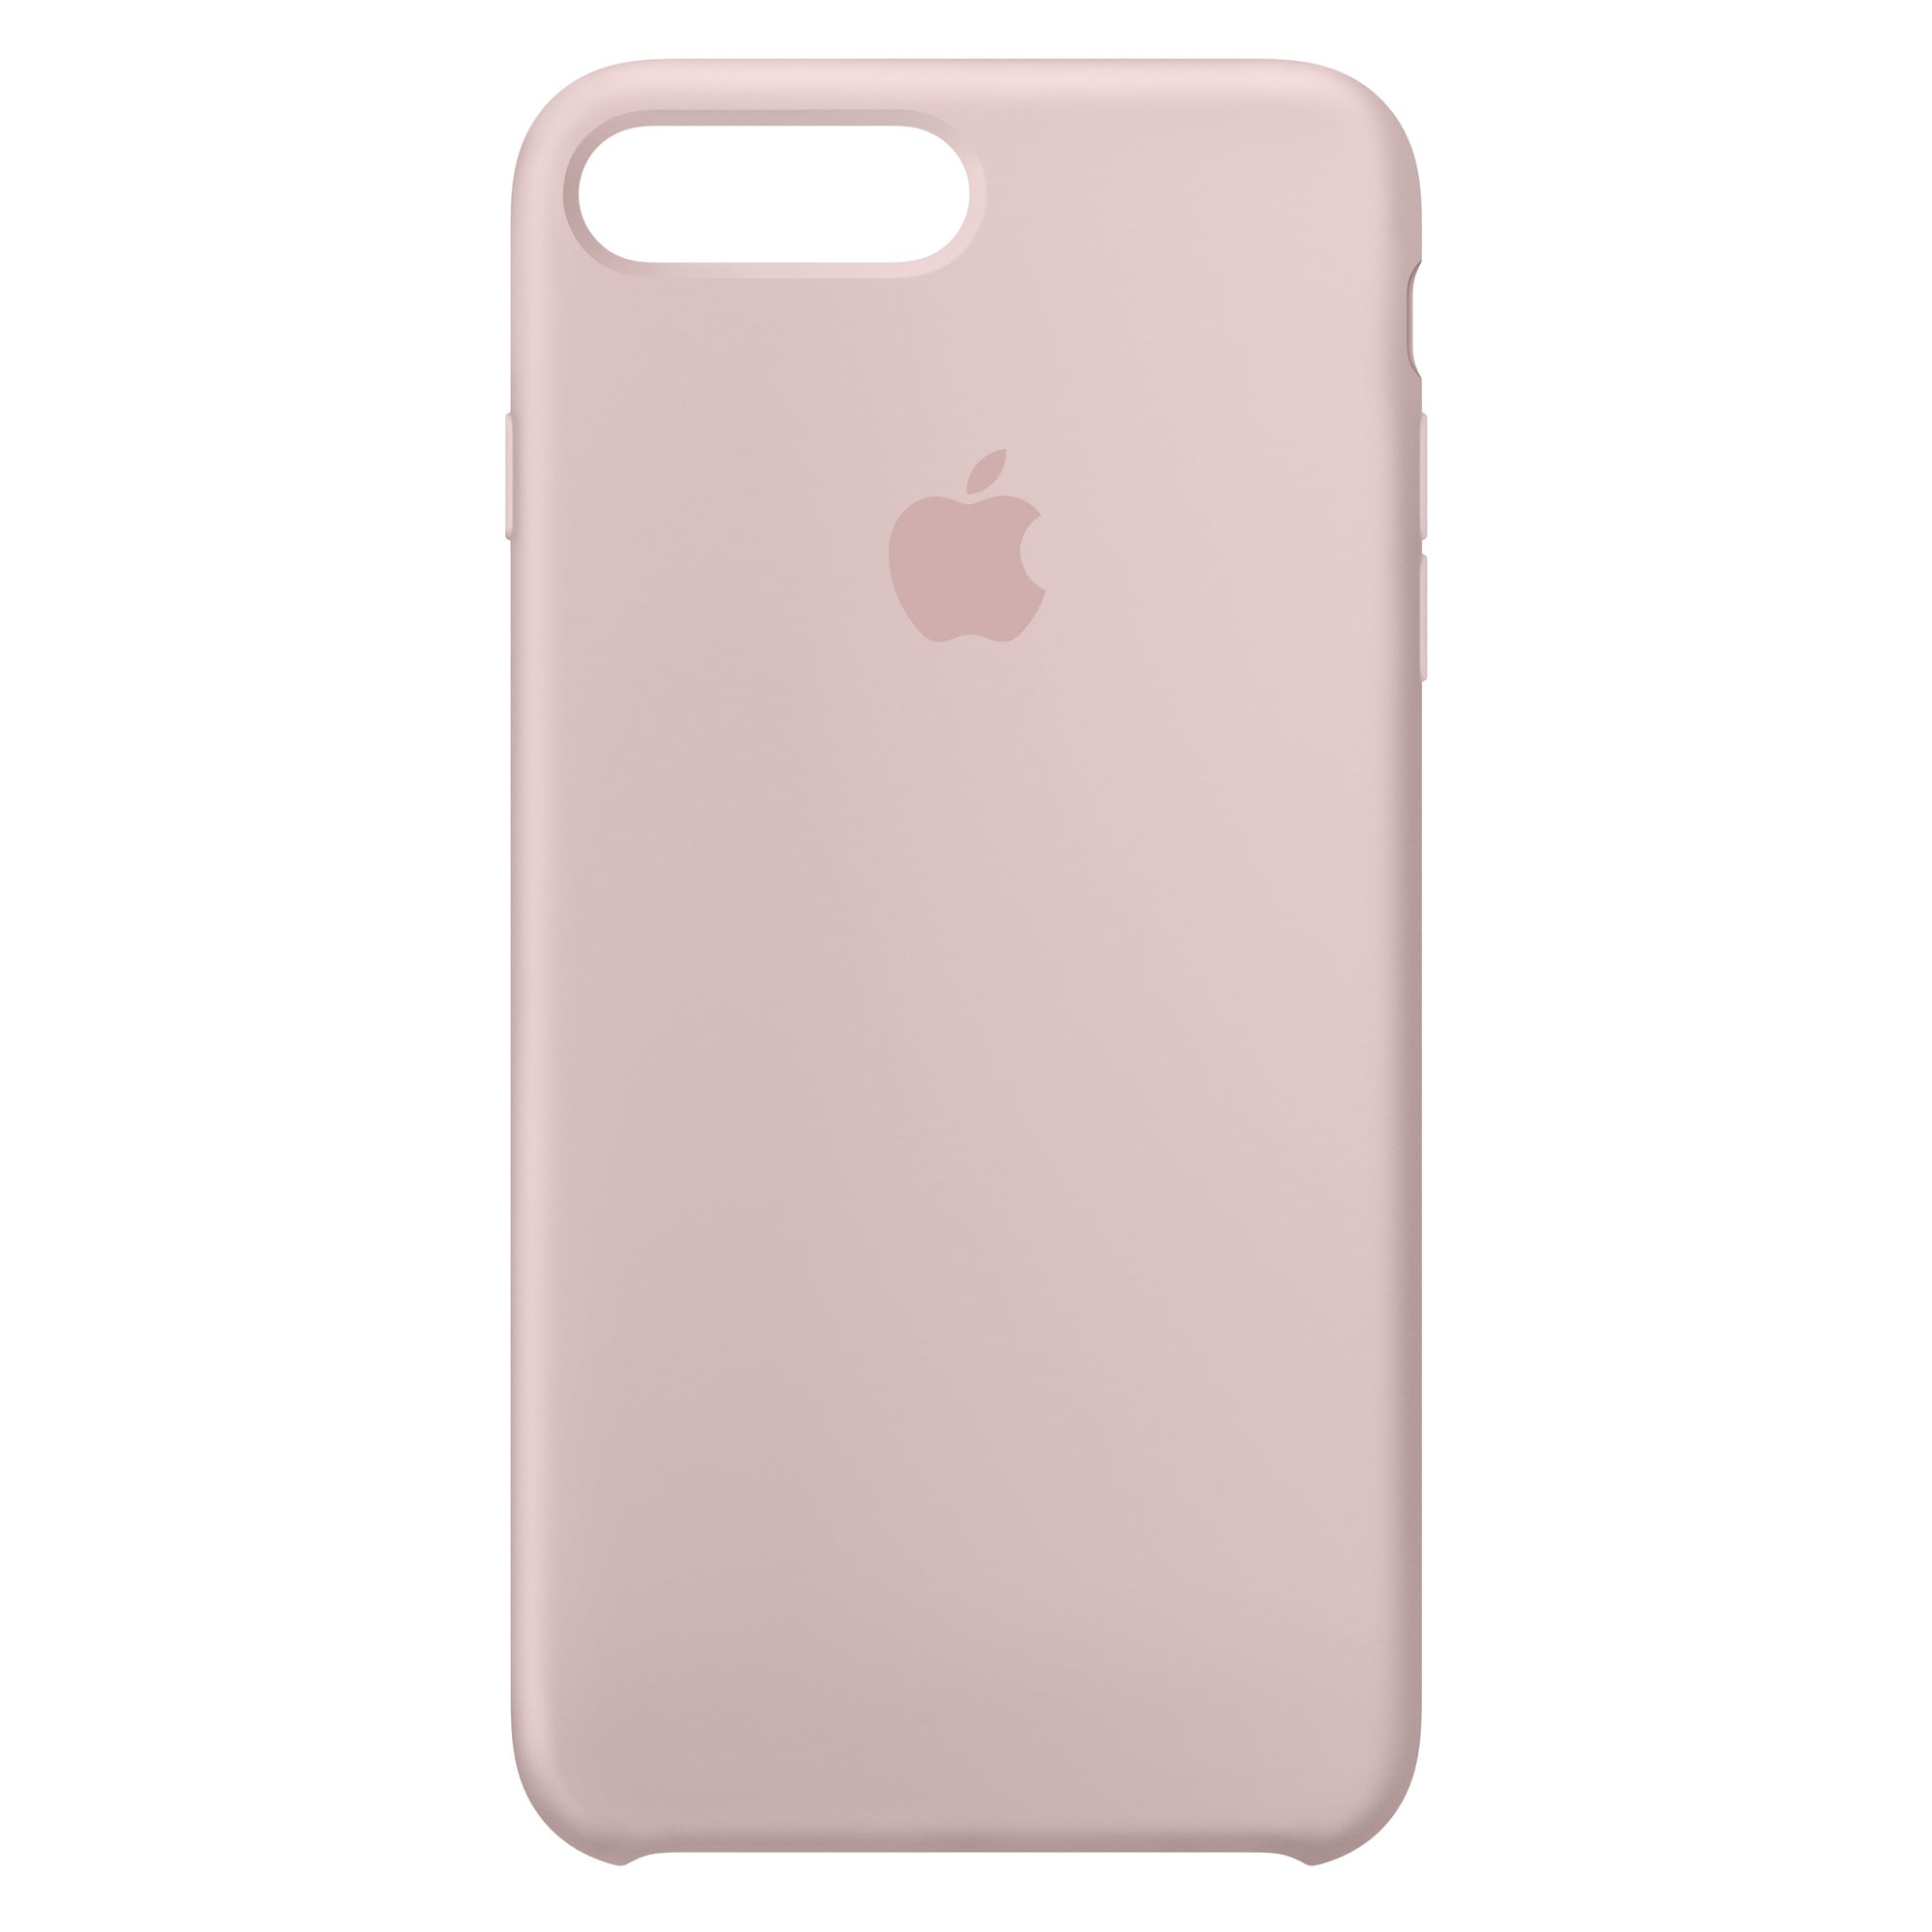 iPhone 8 Plus silikonfodral (rosa sand) - Elgiganten